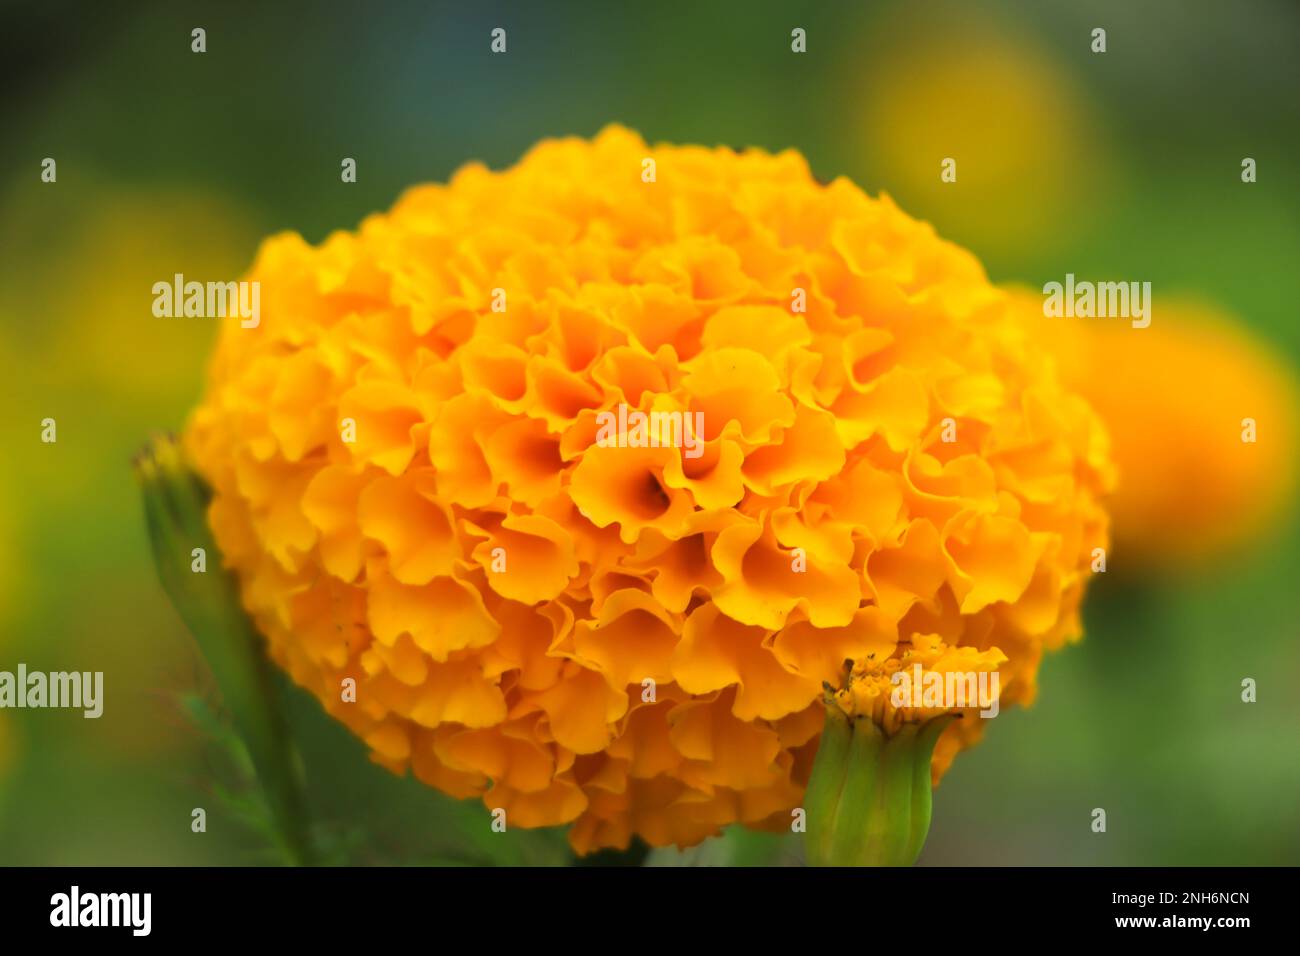 Sfondo marigolds francese. Sfondo floreale arancione. Marigolds arancione. Marigold francese arancione. Fiori arancioni sfondo Foto Stock